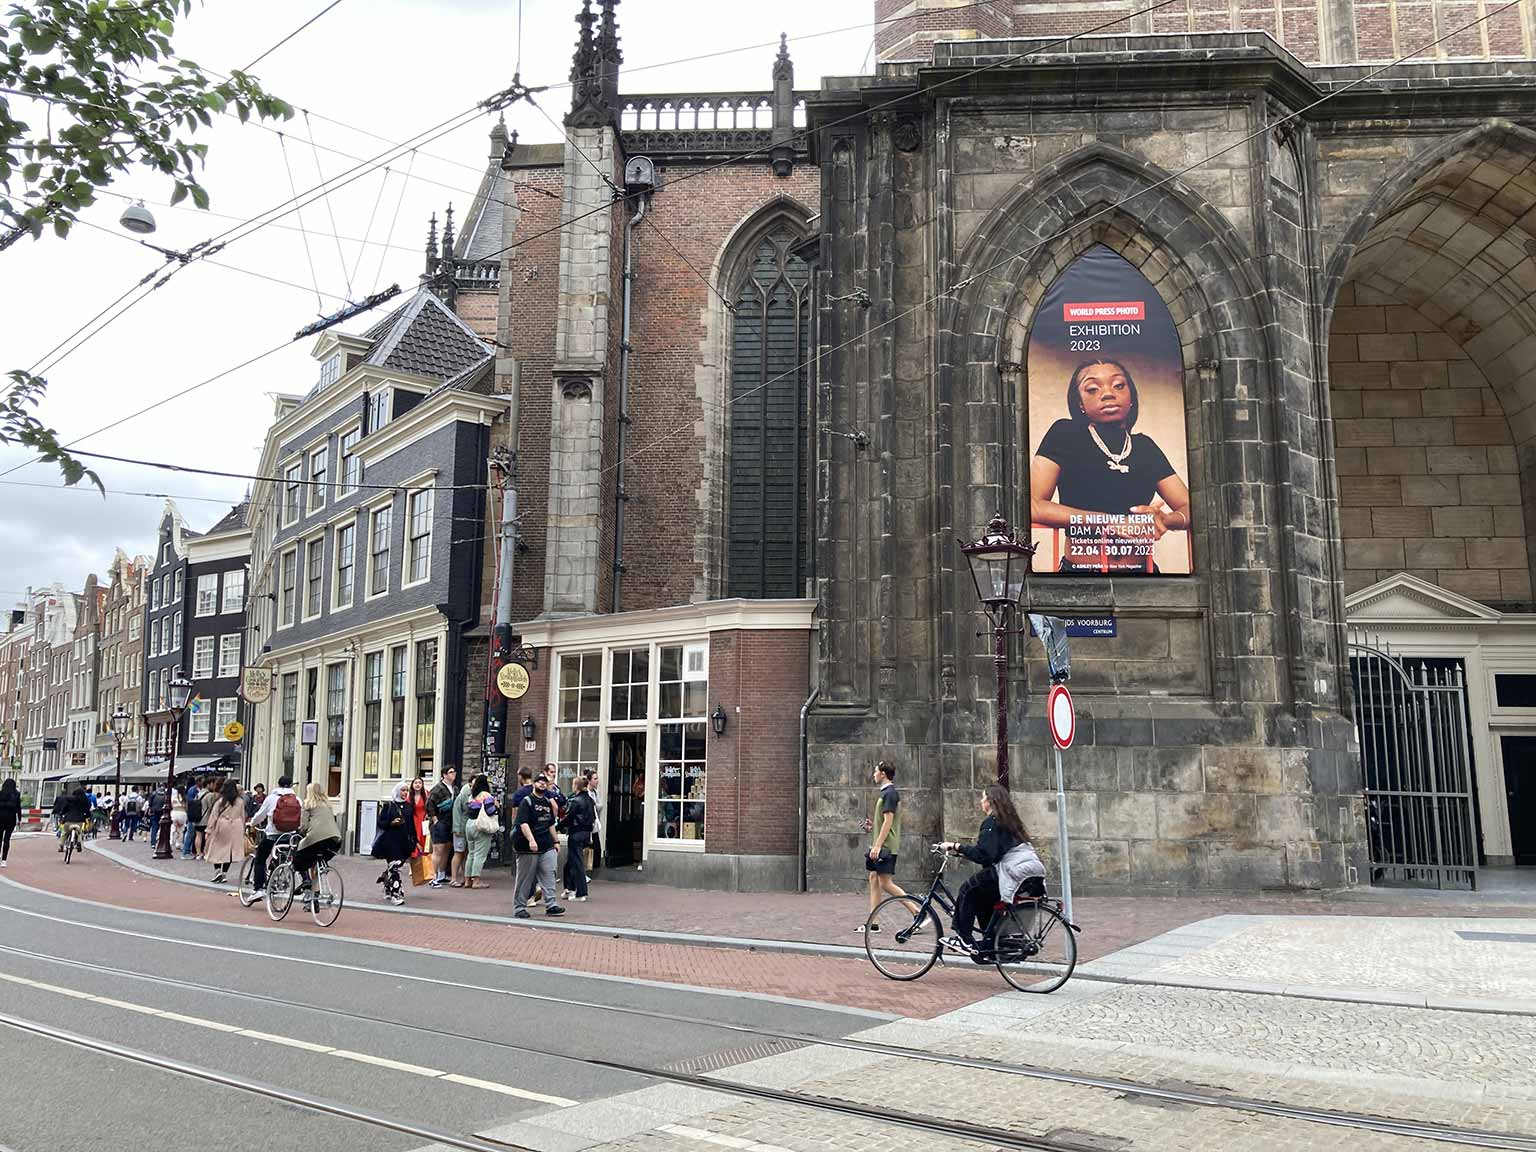 Nieuwezijds Voorburgwal with Nieuwe Kerk and annexes, Amsterdam, looking north